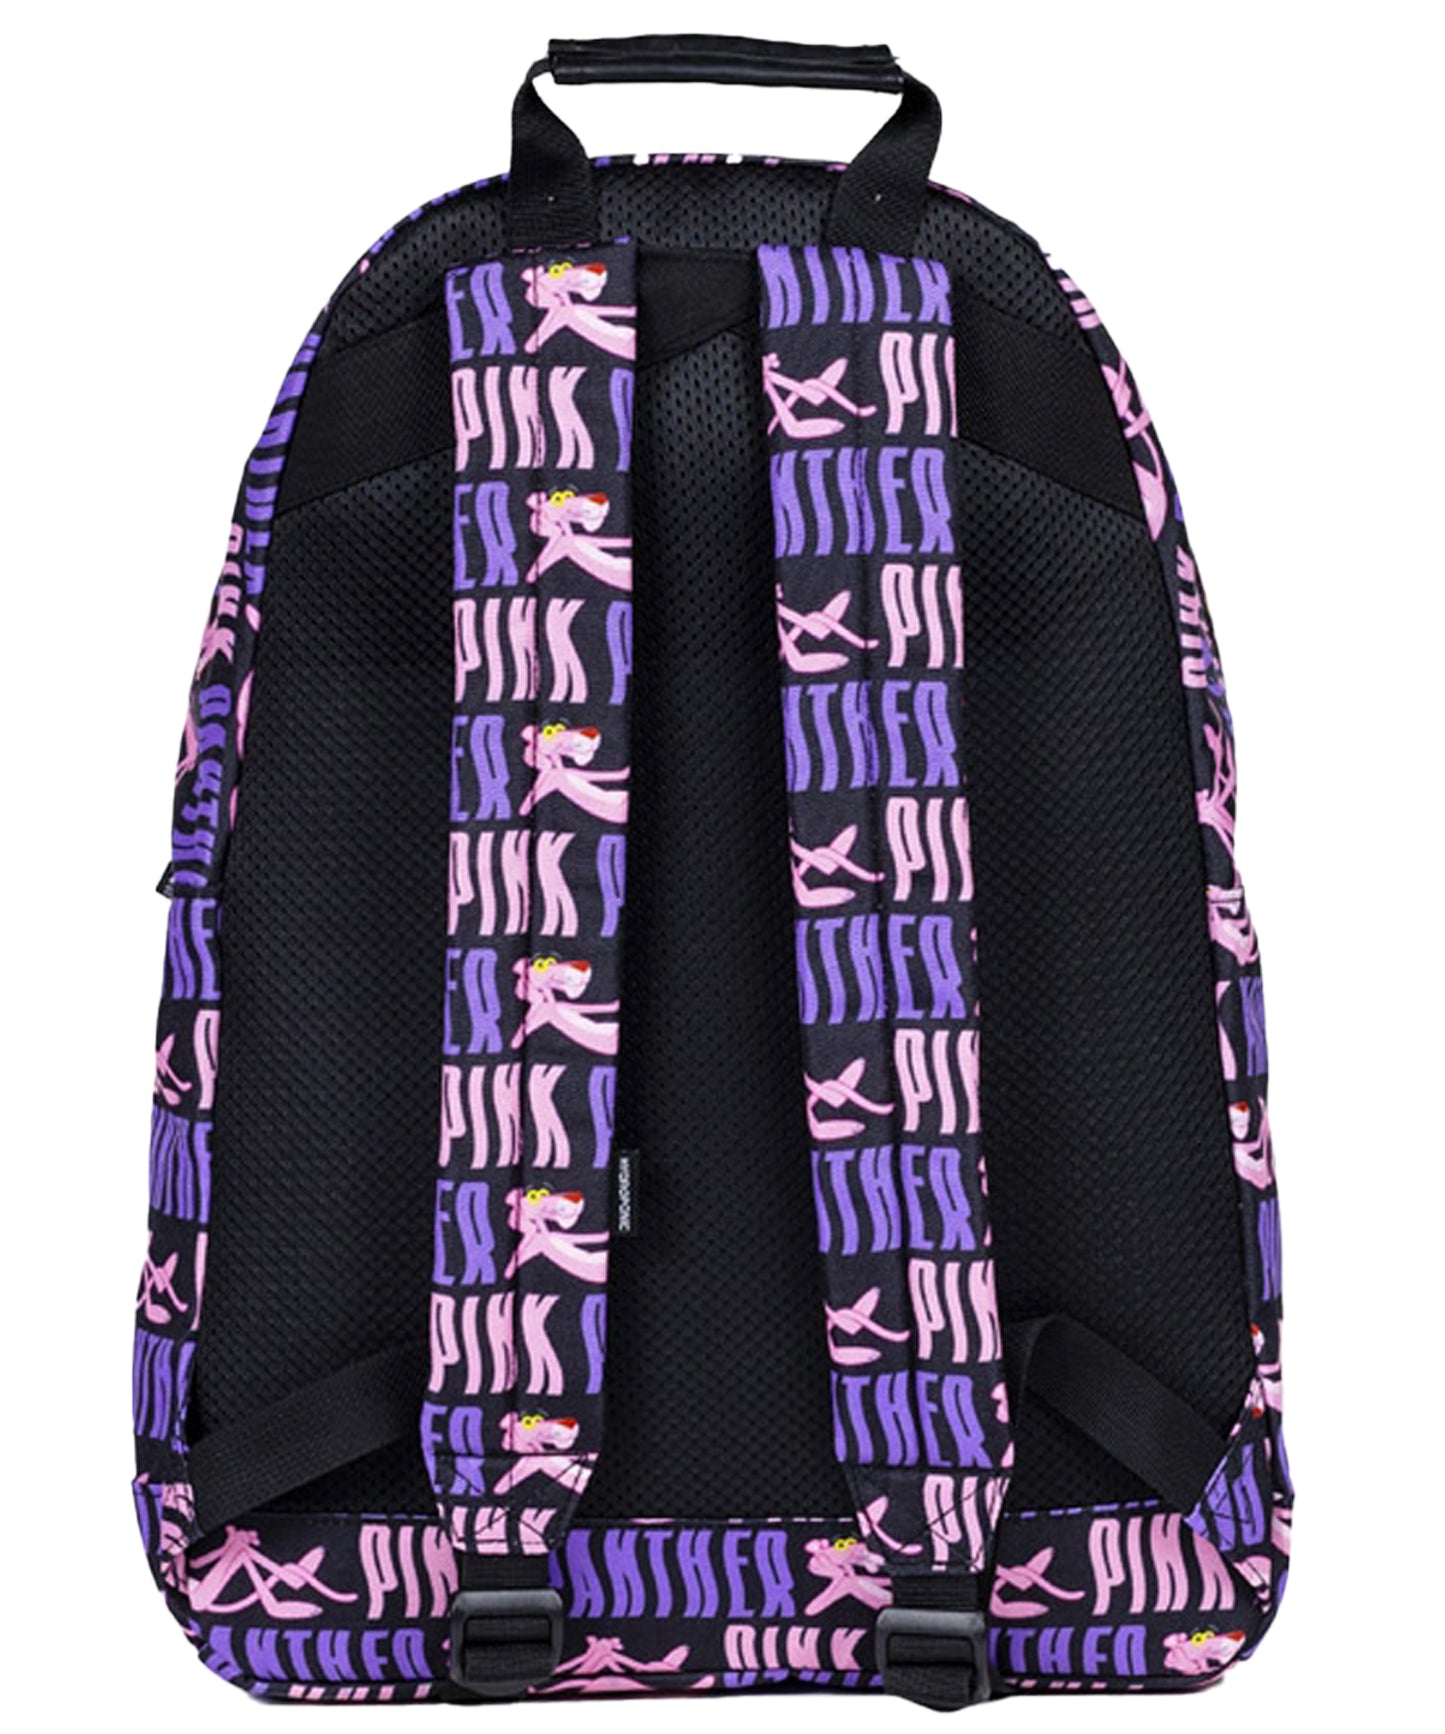 mochila-hydroponic-backpack-panther-black-pink-lines-20.5-litros-capacidad--bolsillo-delantero-bolsillo-para-ordenador-doble-cremallera